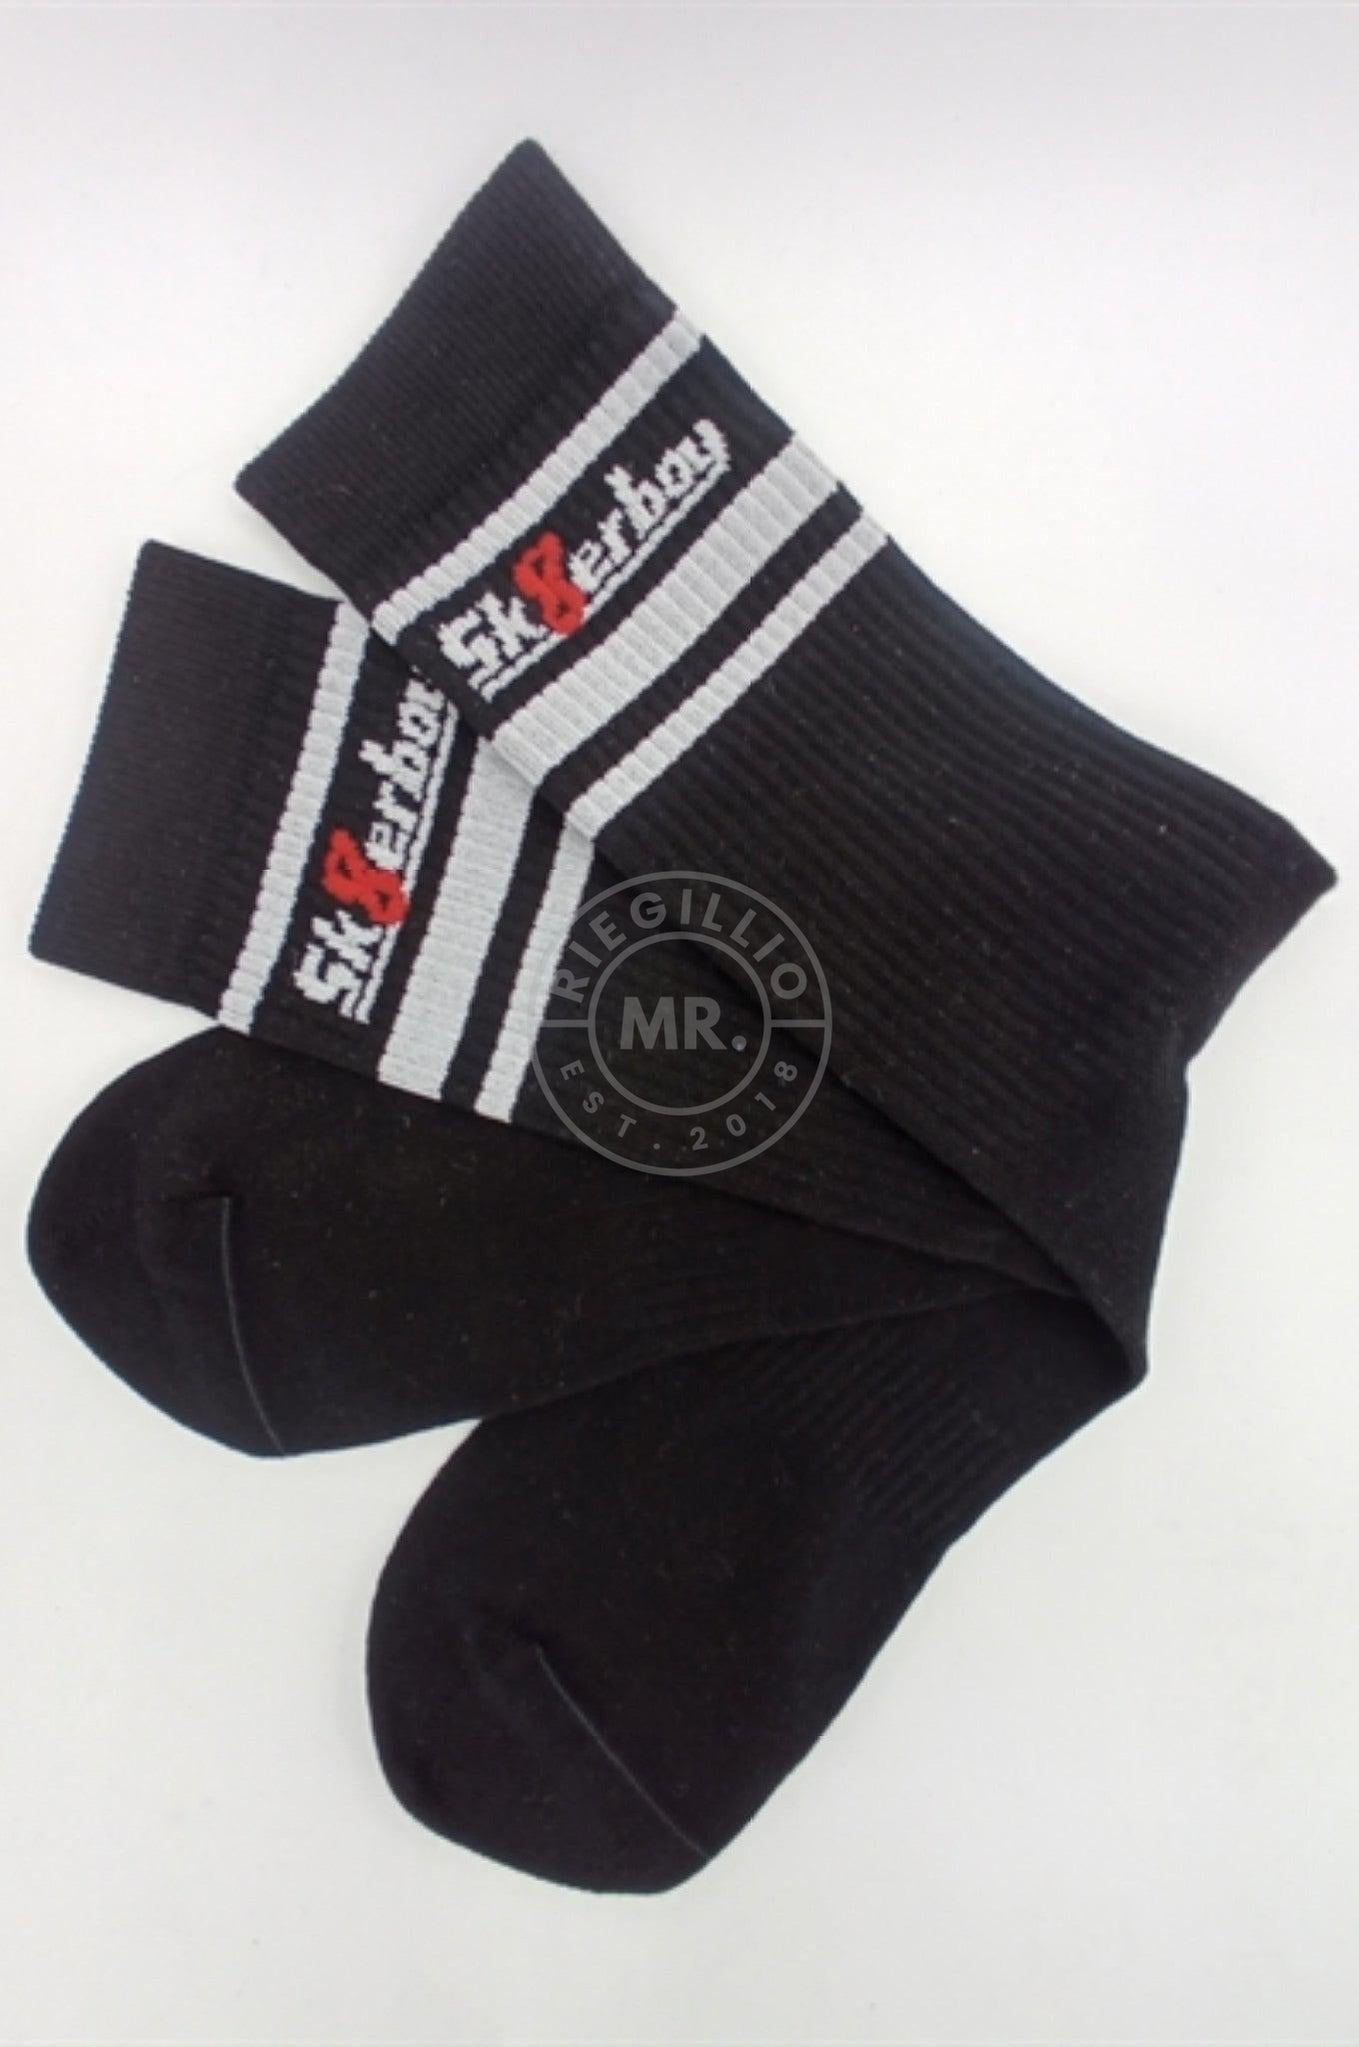 Sk8erboy VICTORY Socks - Black-at MR. Riegillio